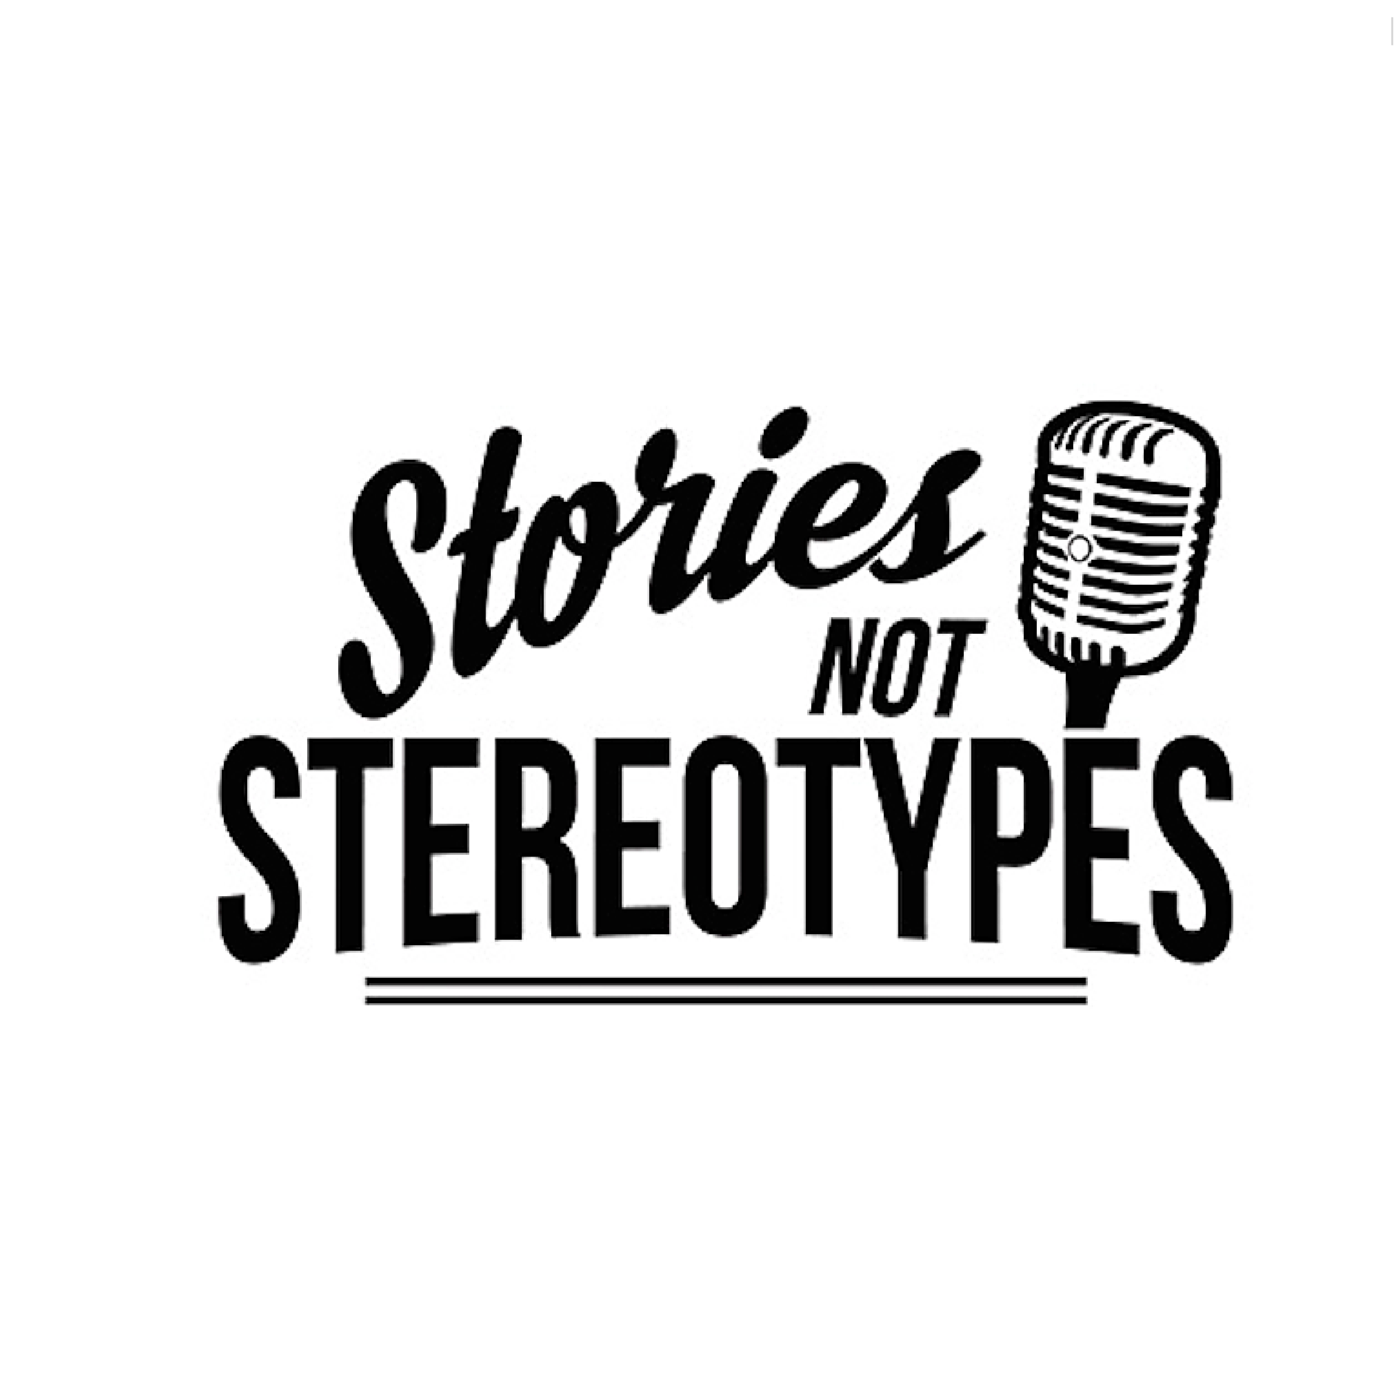 StoriesNotStereotypes